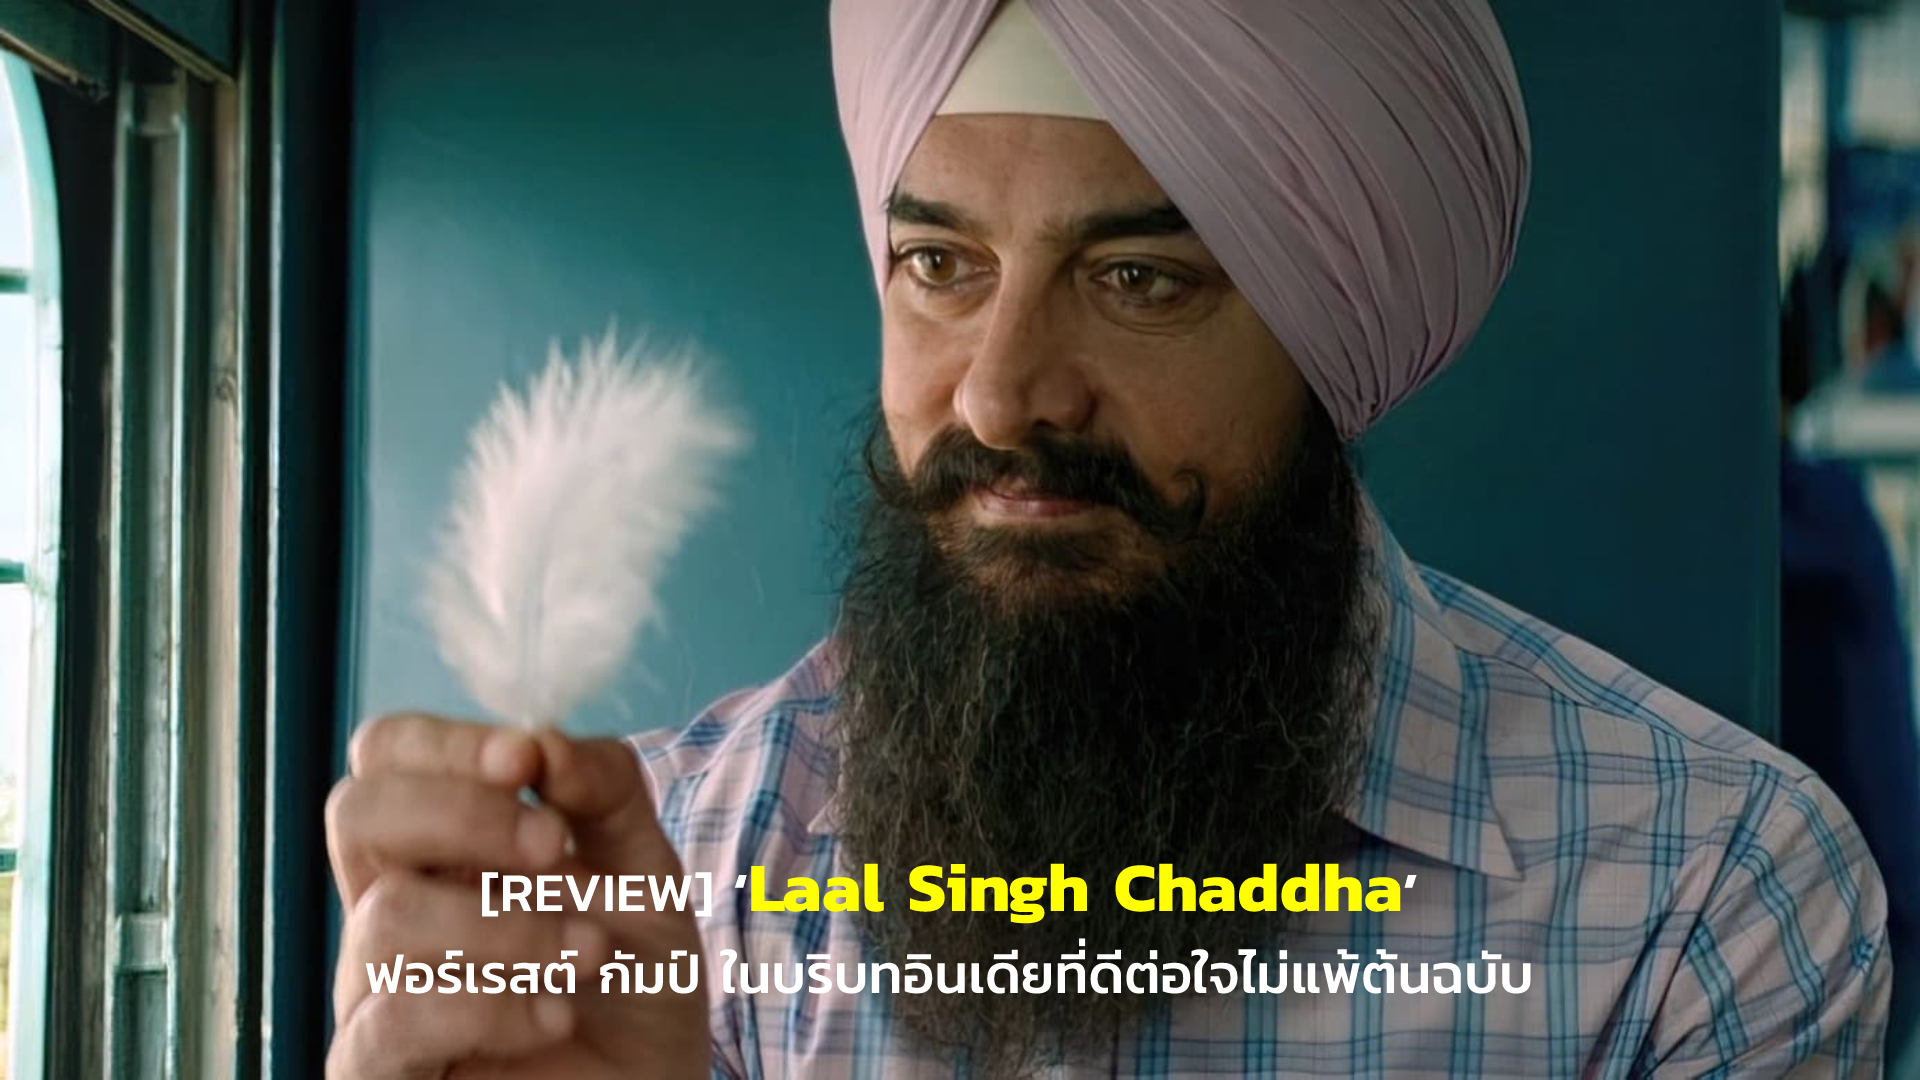 [REVIEW] ‘Laal Singh Chaddha’ ฟอร์เรสต์ กัมป์ ในบริบทอินเดียที่ดีต่อใจไม่แพ้ต้นฉบับ | GOSSIP GUN